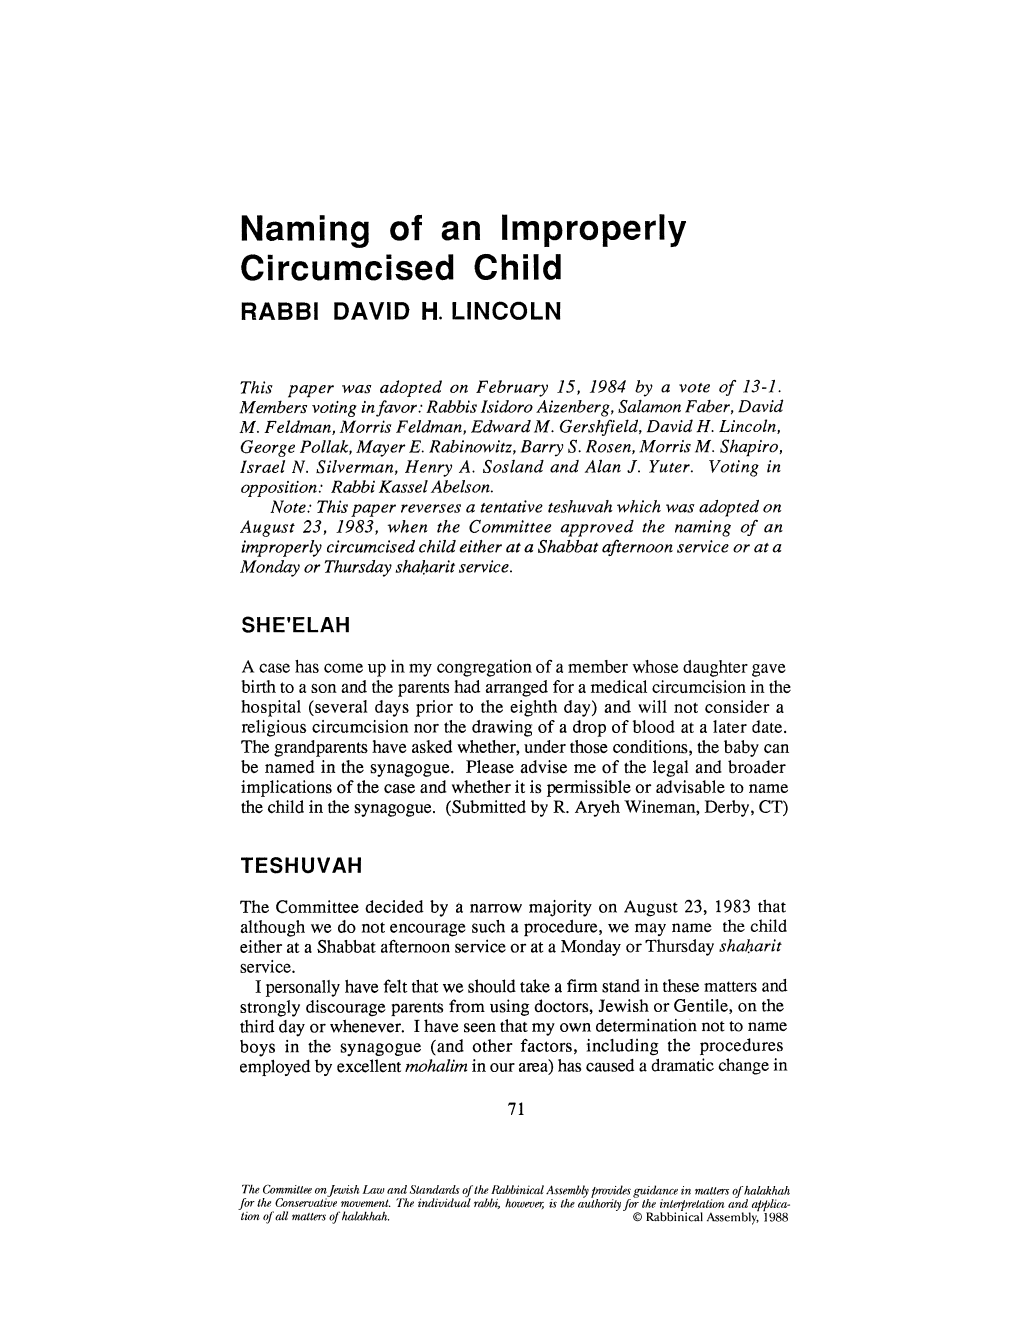 Naming of an Improperly Circumcised Child RABBI DAVID H